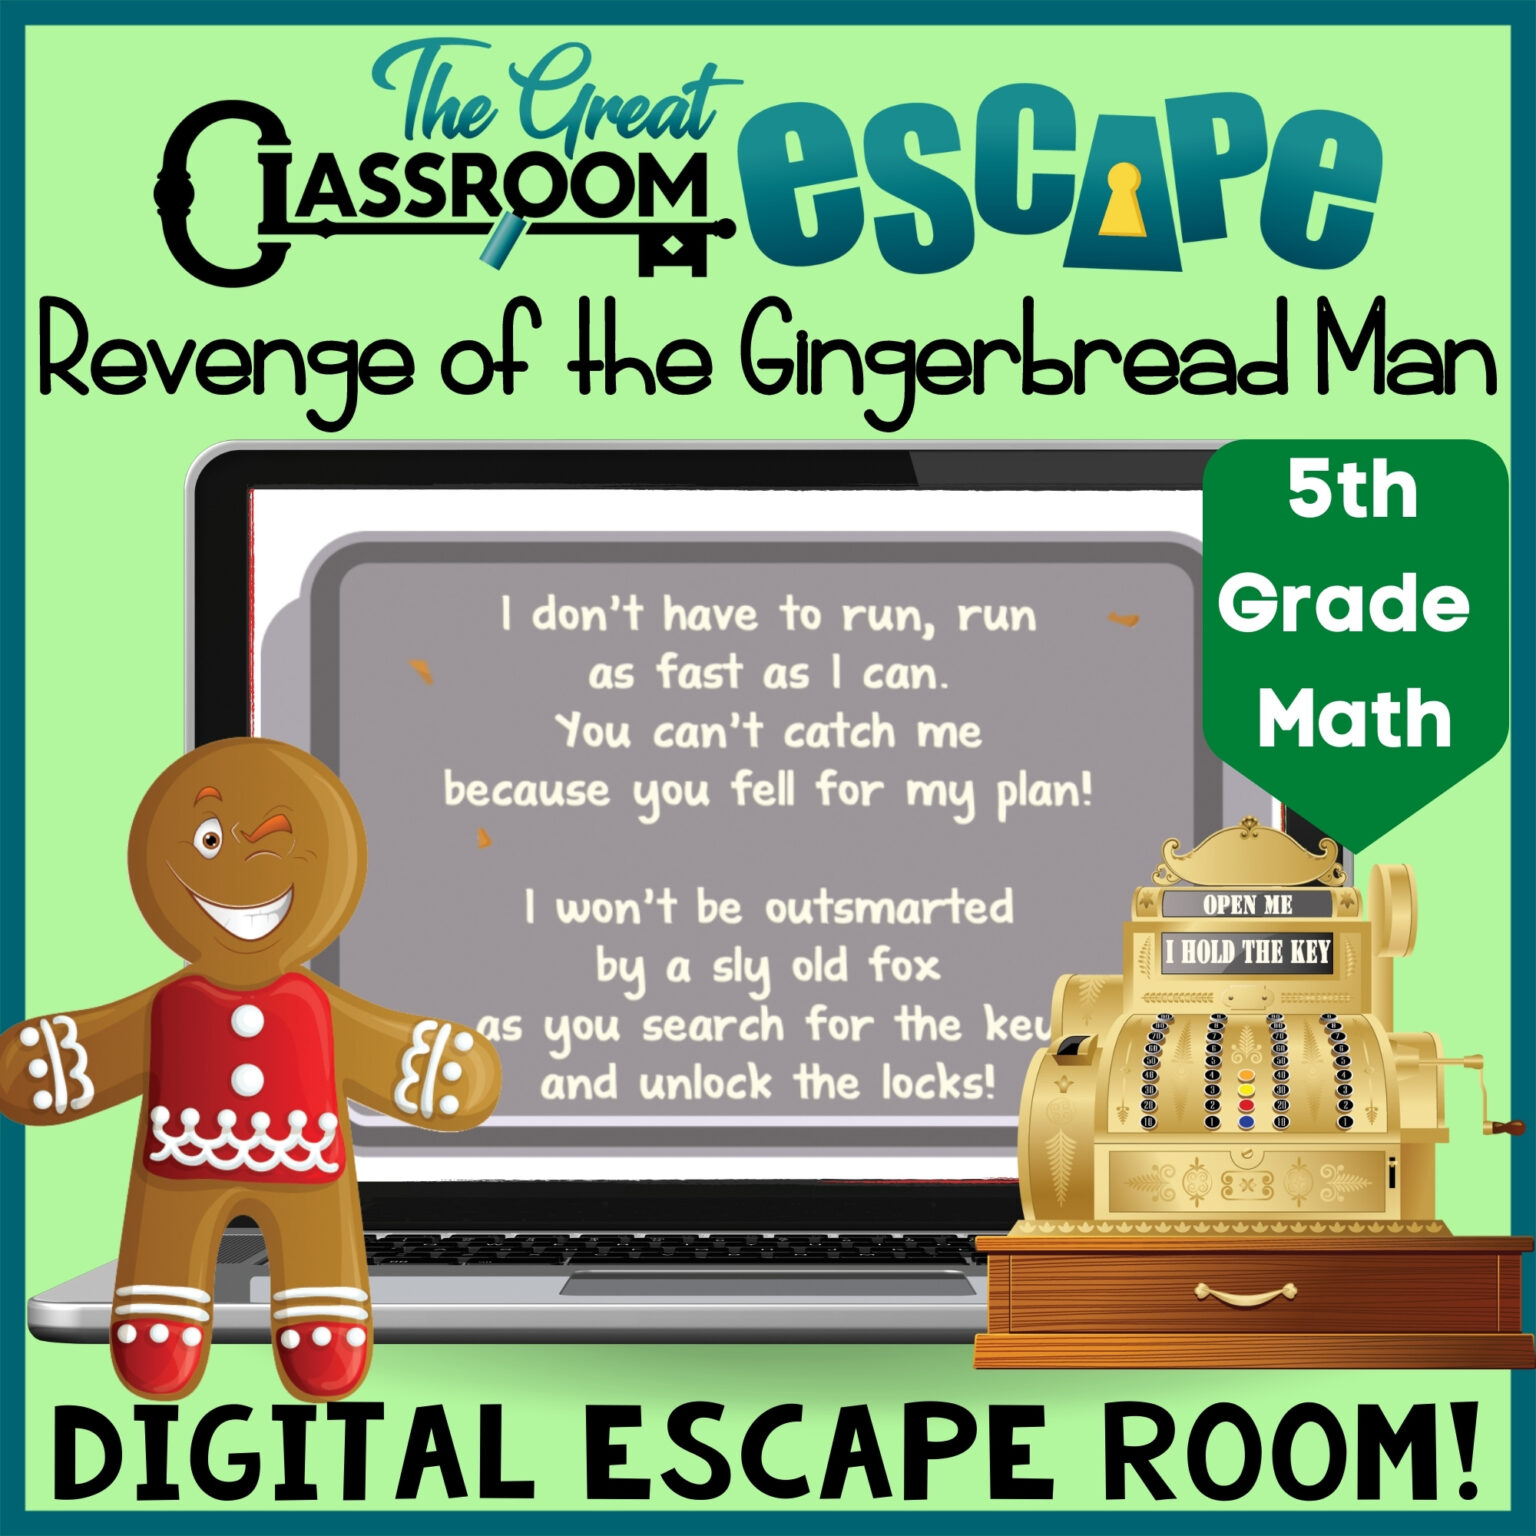 5th-grade-math-escape-room-activity-revenge-of-the-gingerbread-man-the-great-classroom-escape